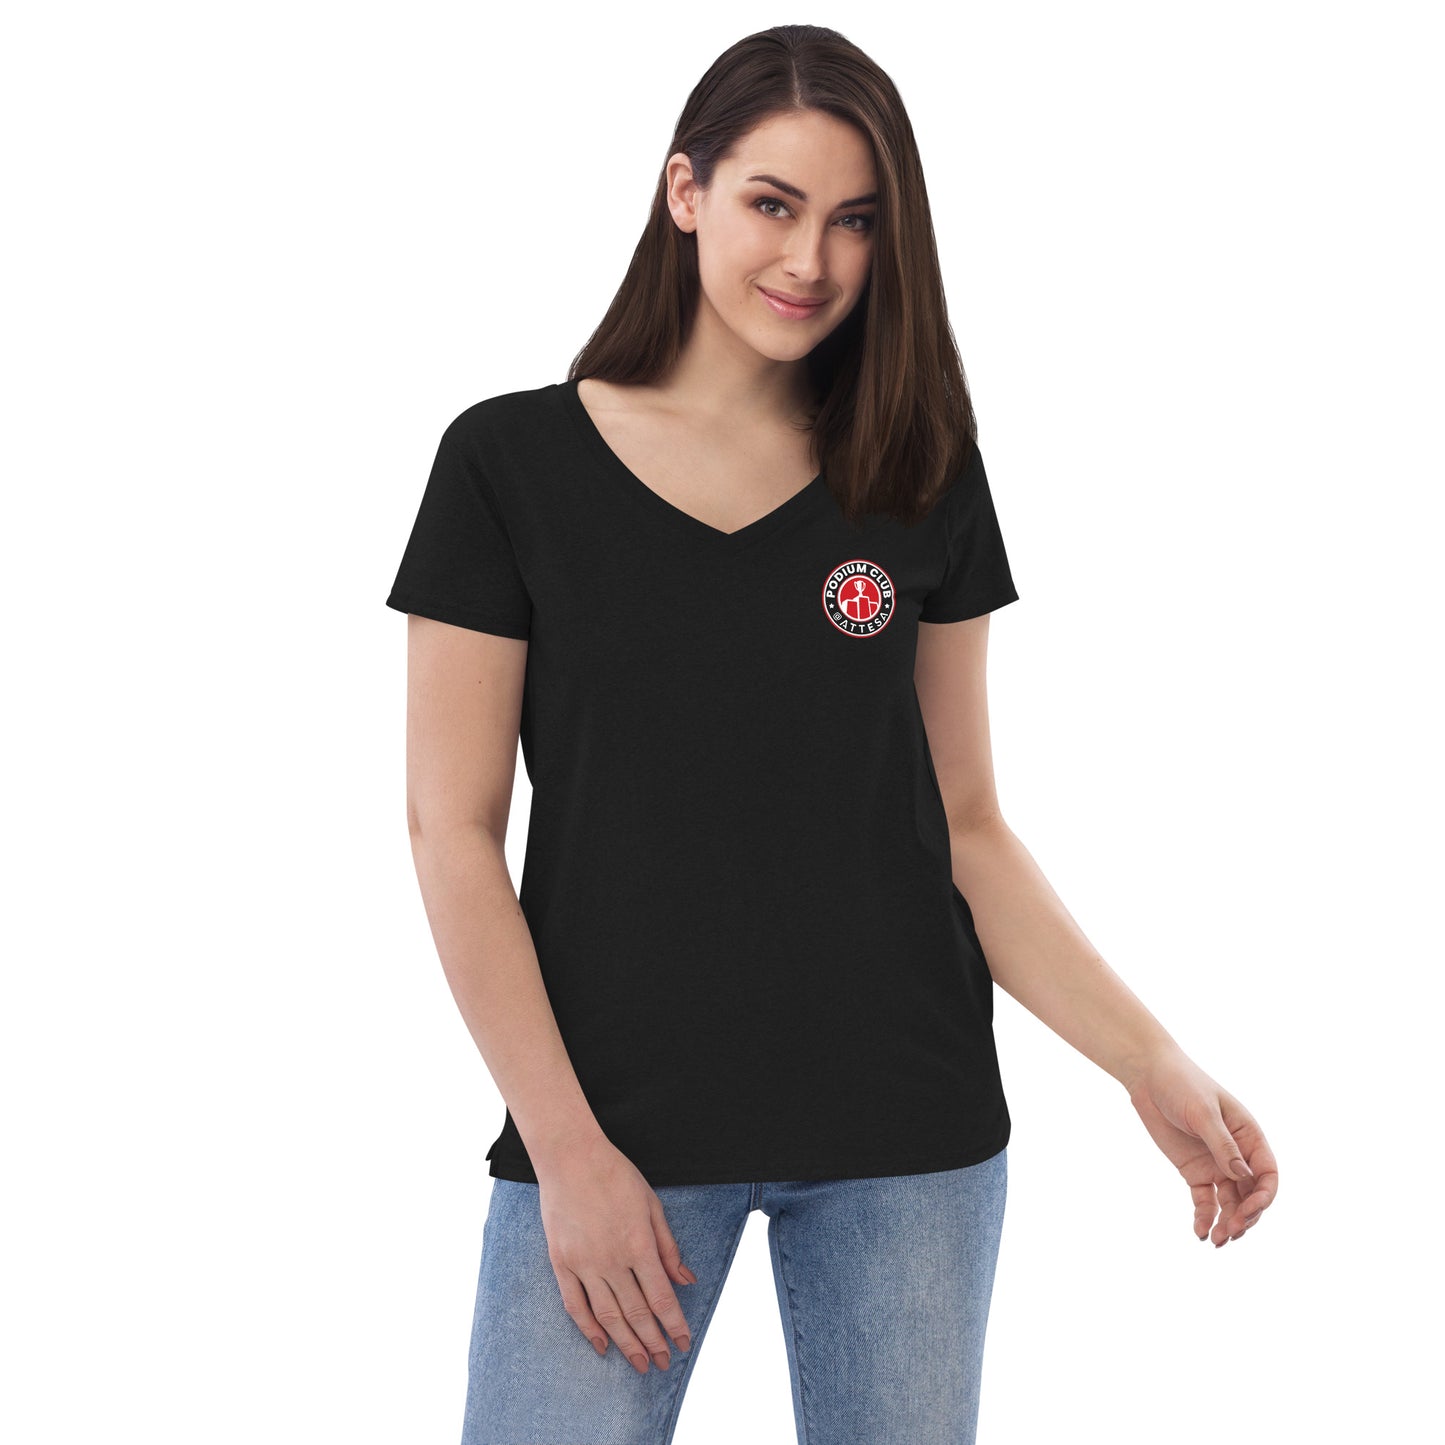 Women’s Recycled Podium Club V-Neck T-Shirt